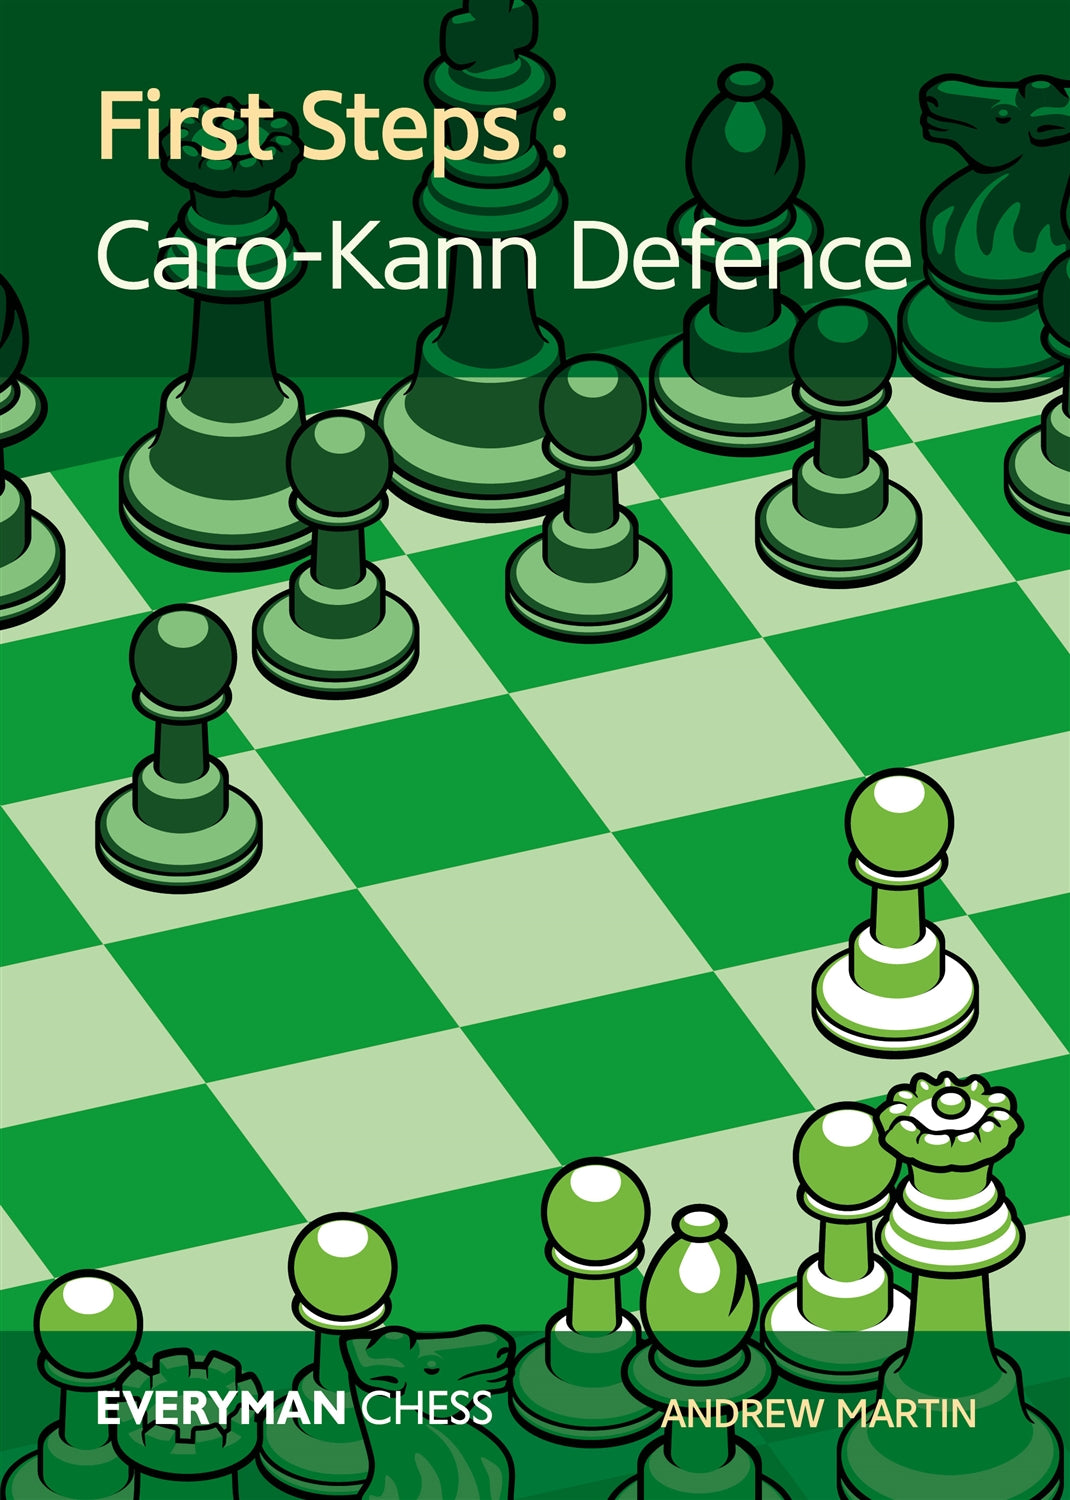 The Modernized Caro-Kann - Daniel Fernandez